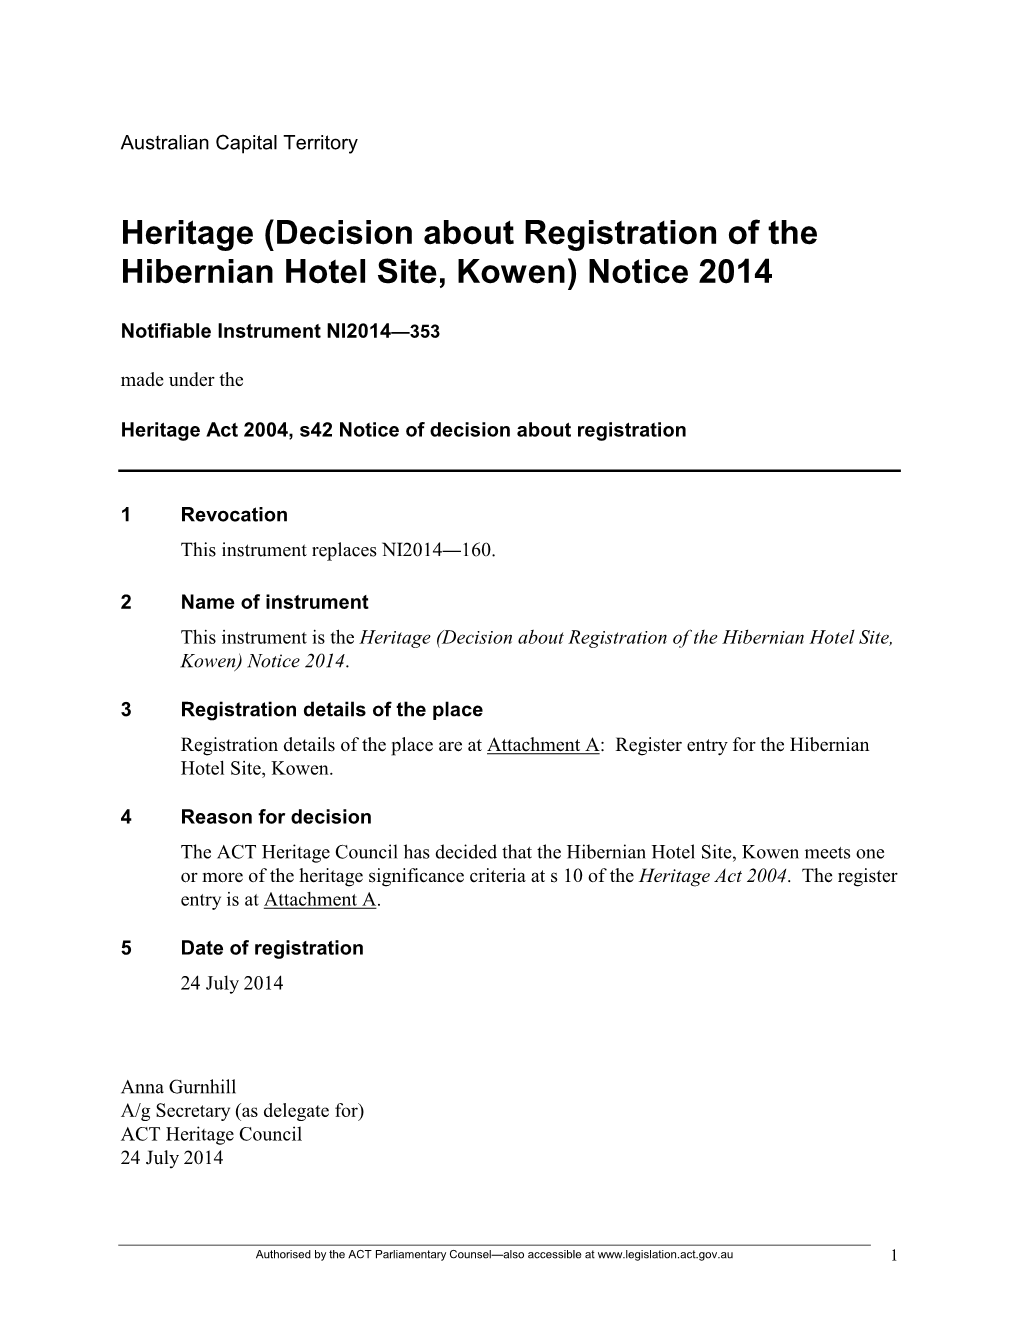 Decision About Registration of the Hibernian Hotel Site, Kowen) Notice 2014